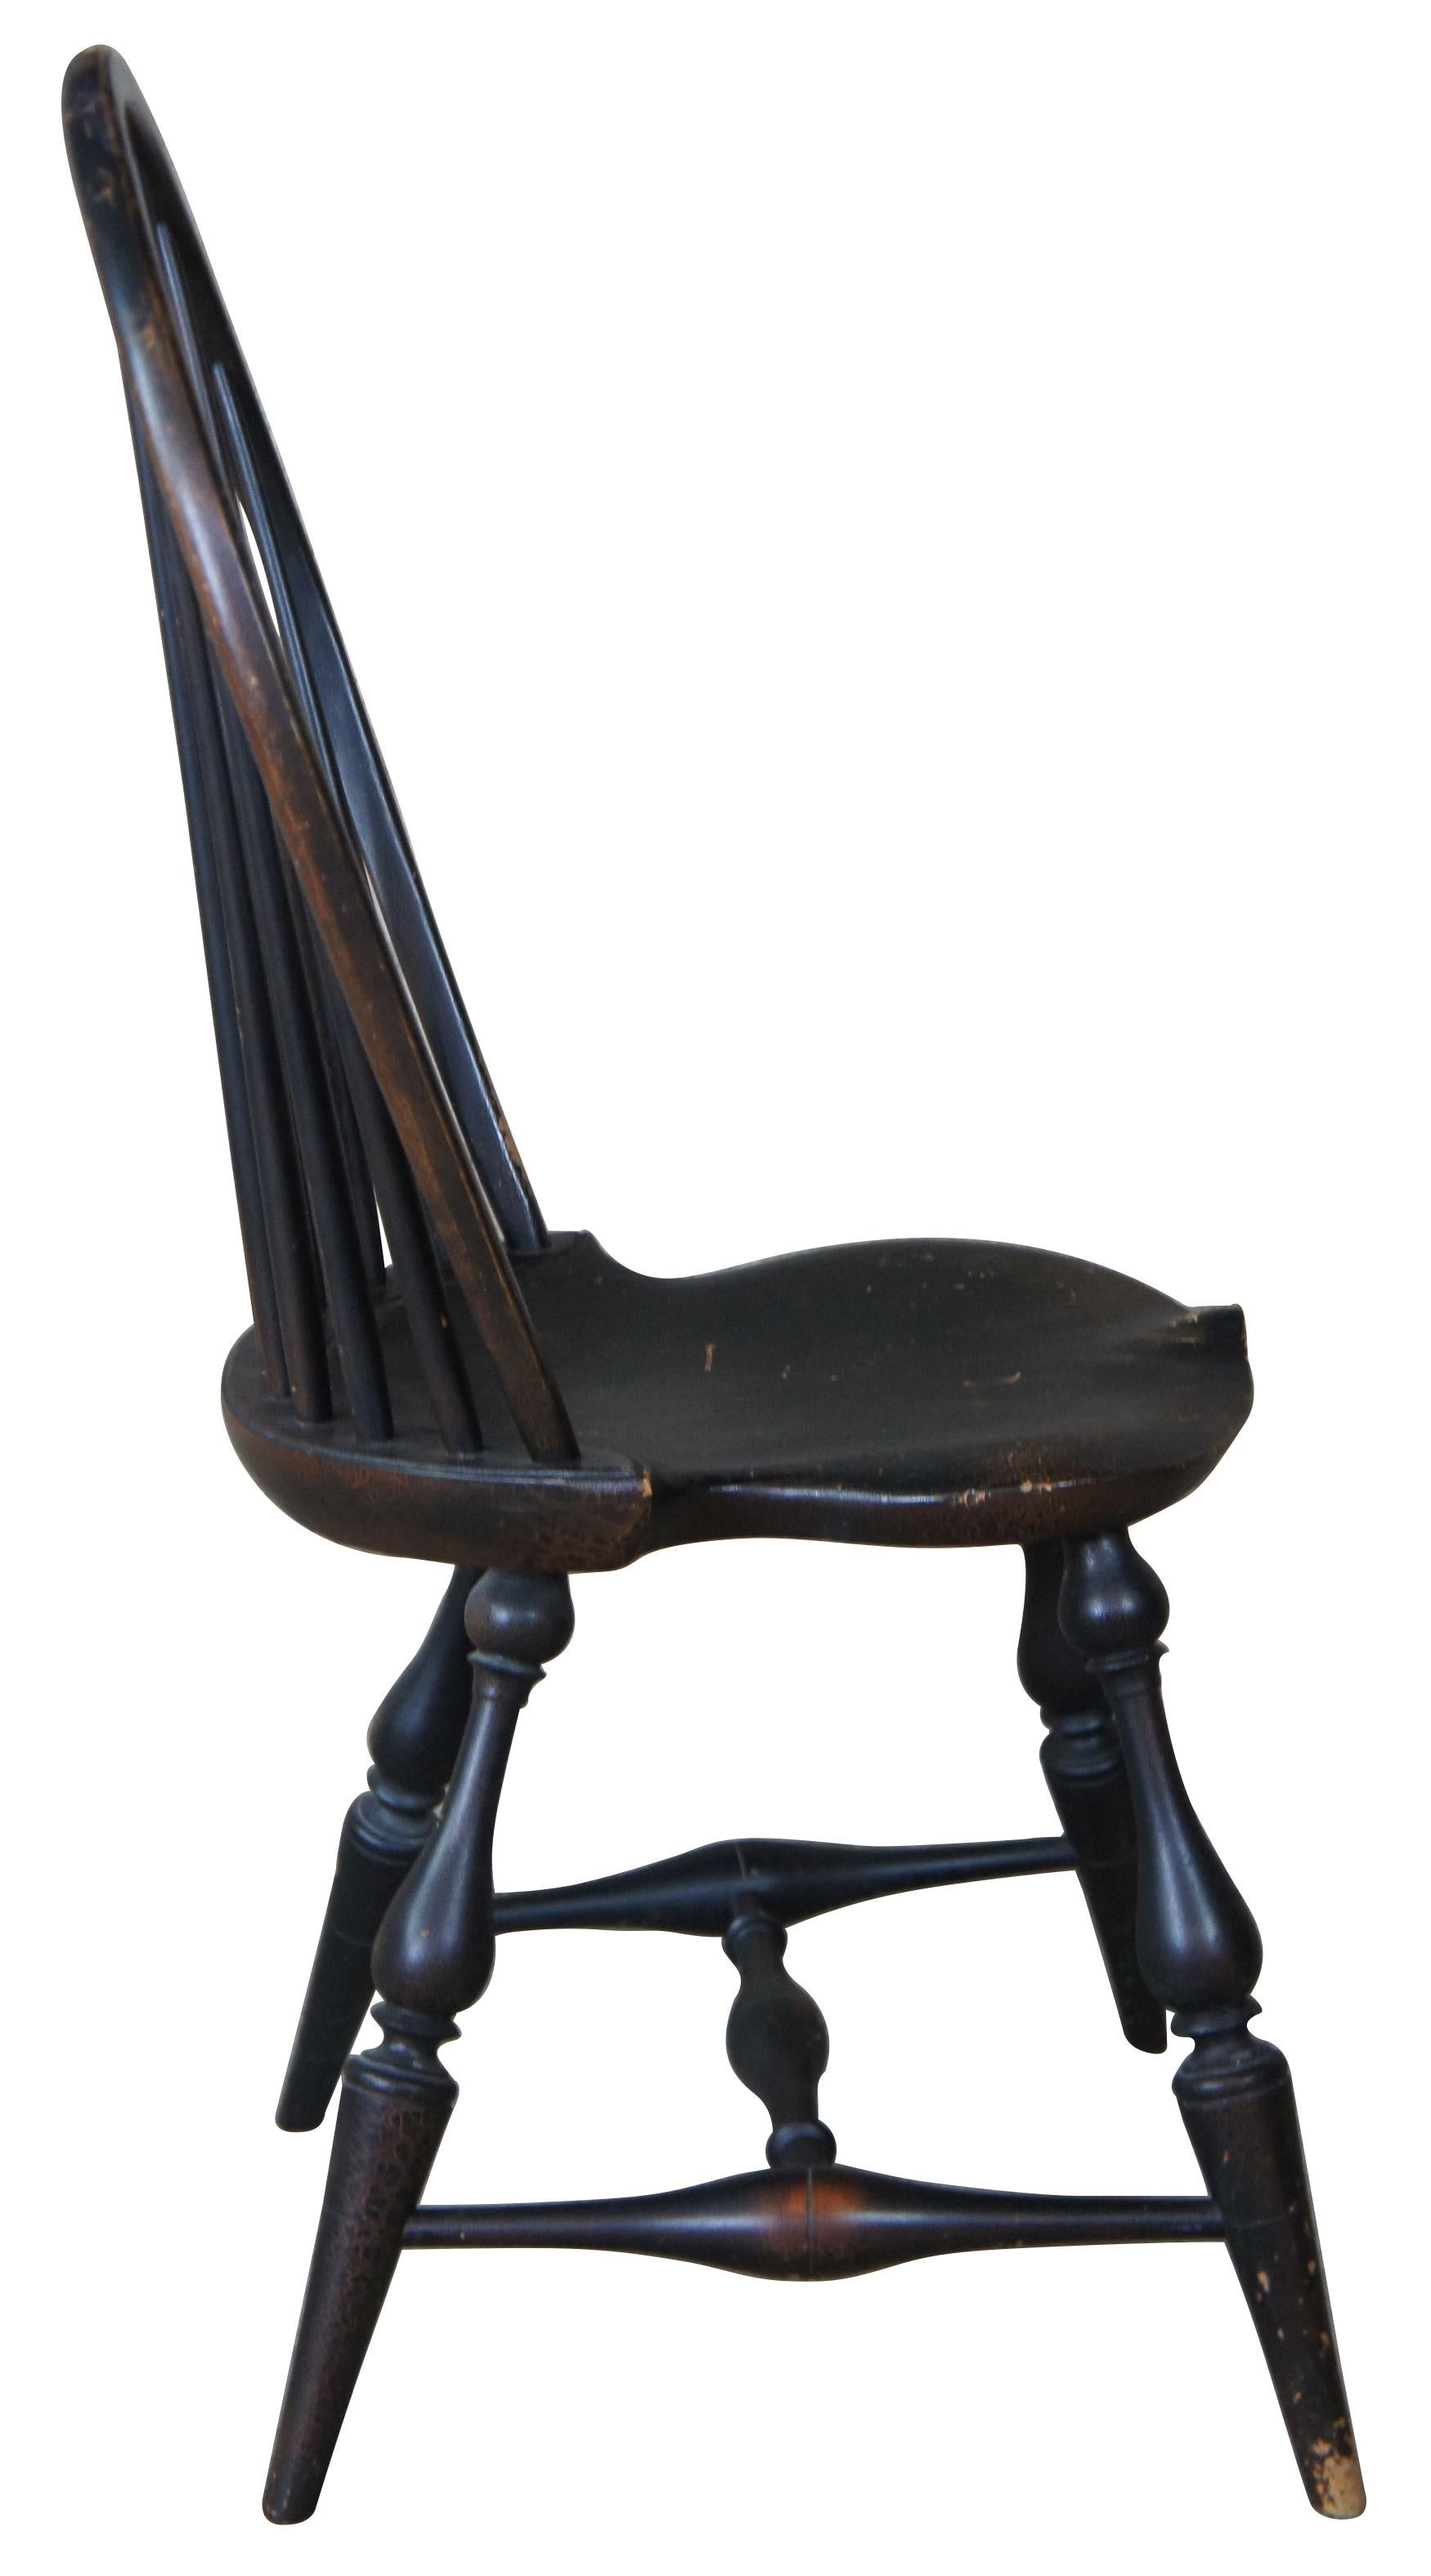 riverbend chair company